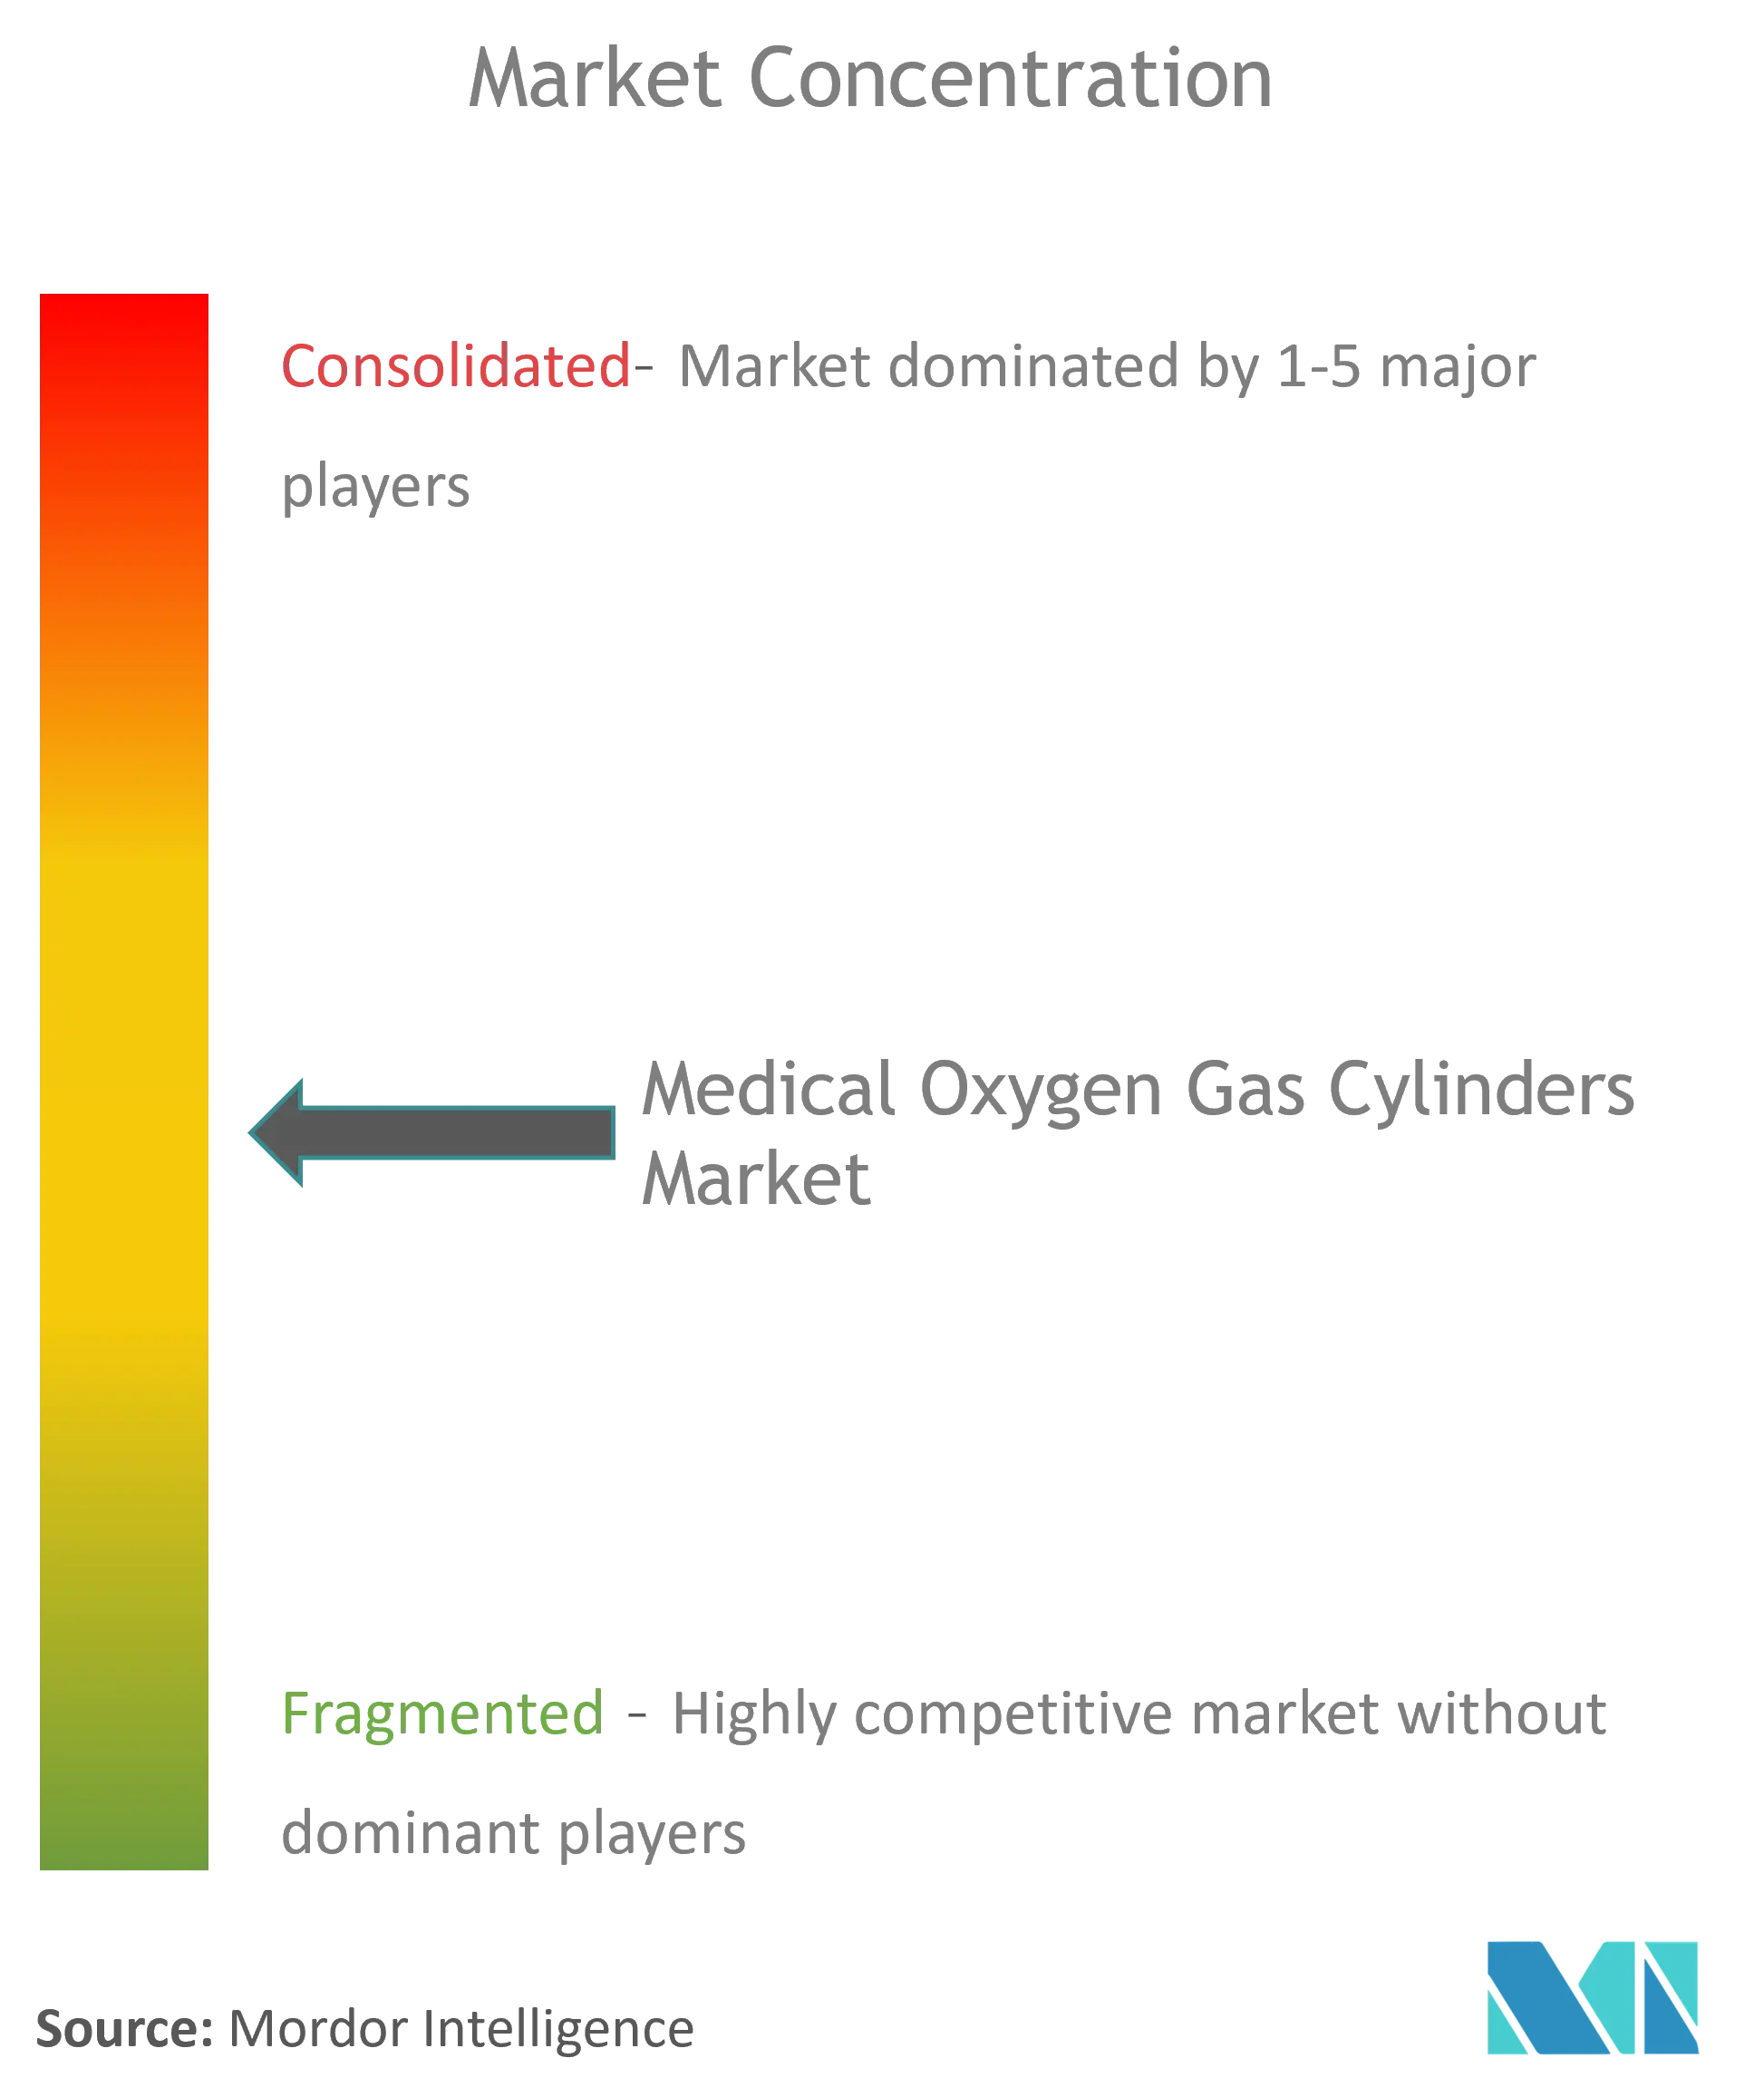 Medical Oxygen Gas Cylinders Market Concentration